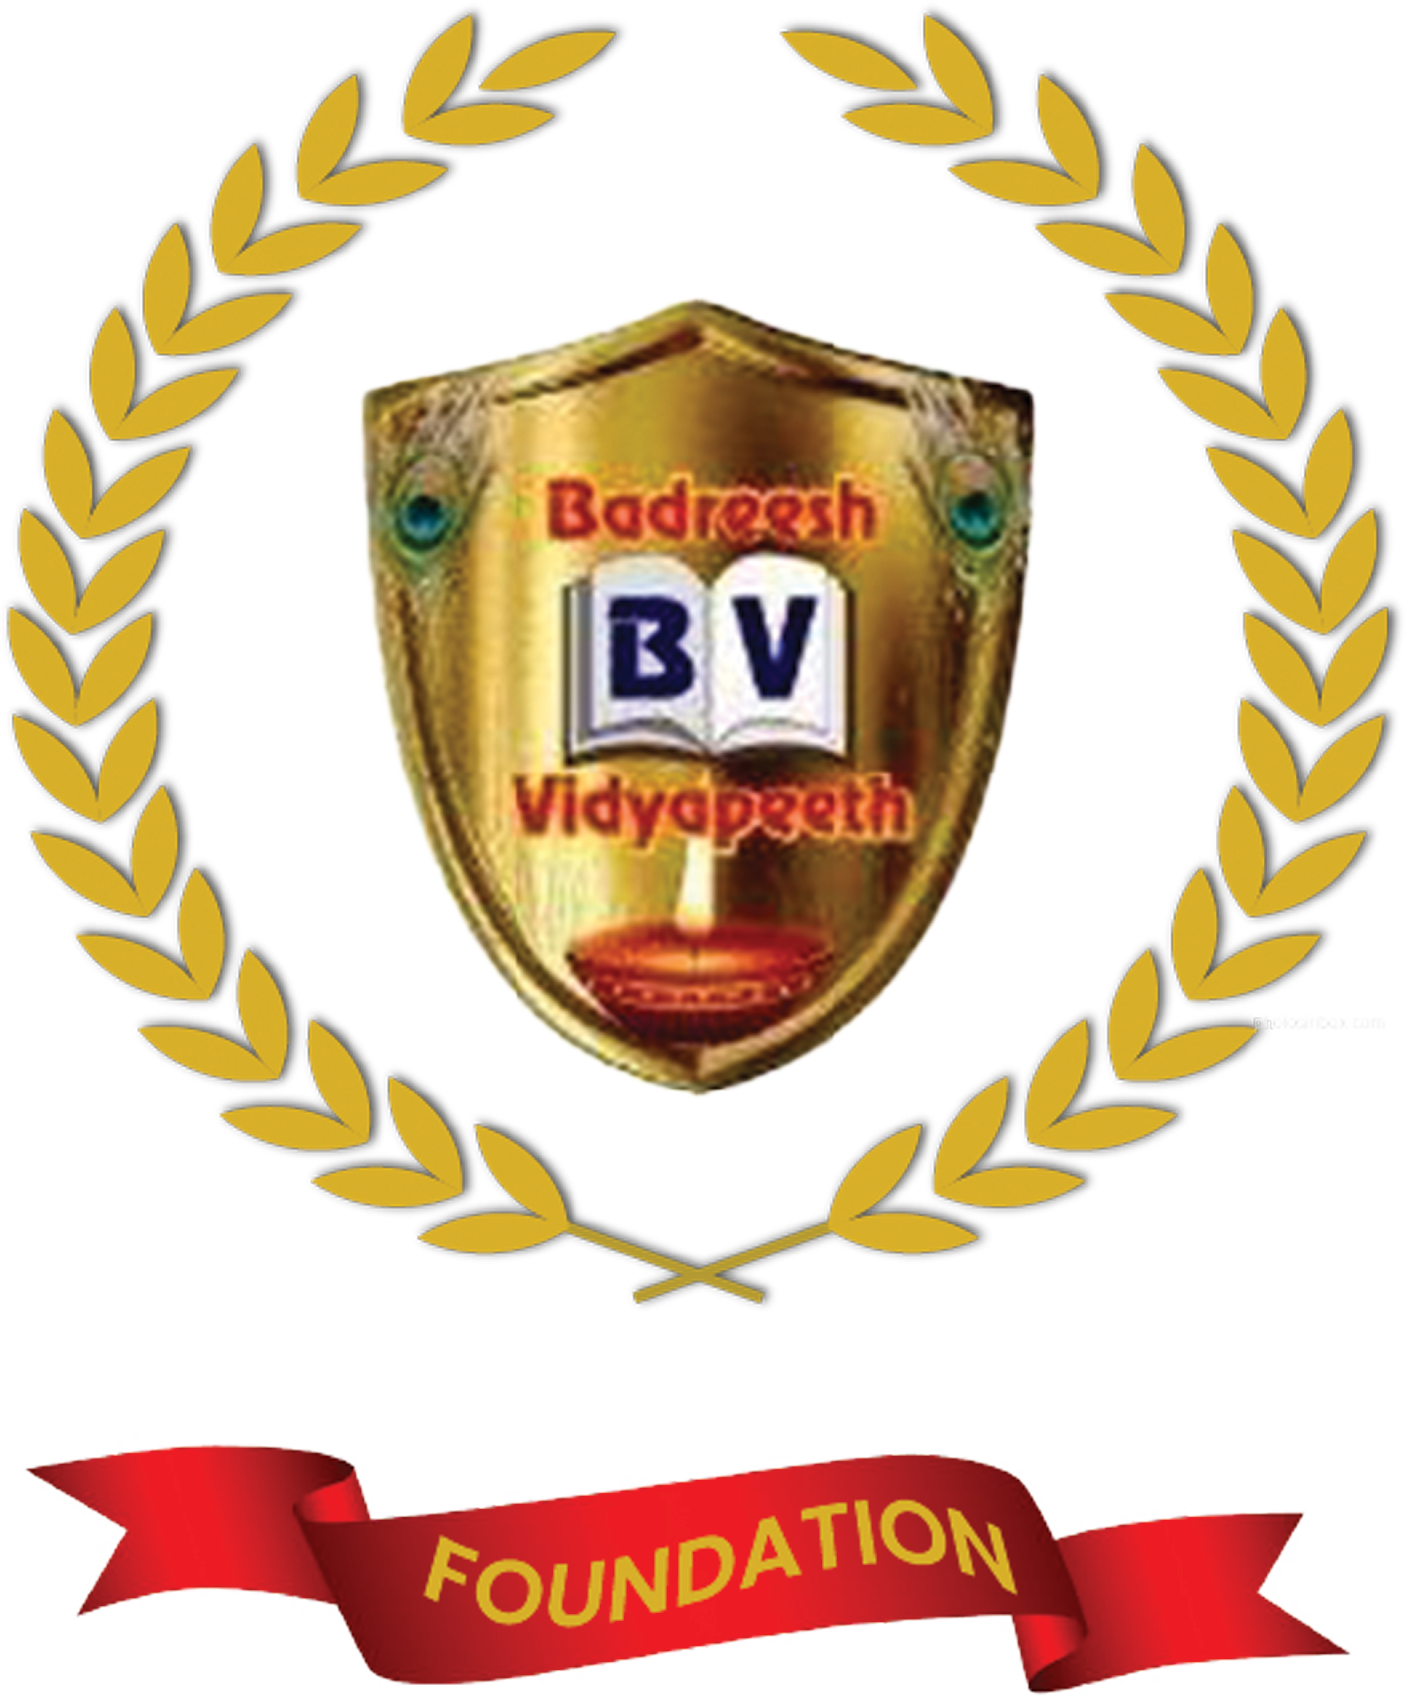 Badreesh Vidyapeeth